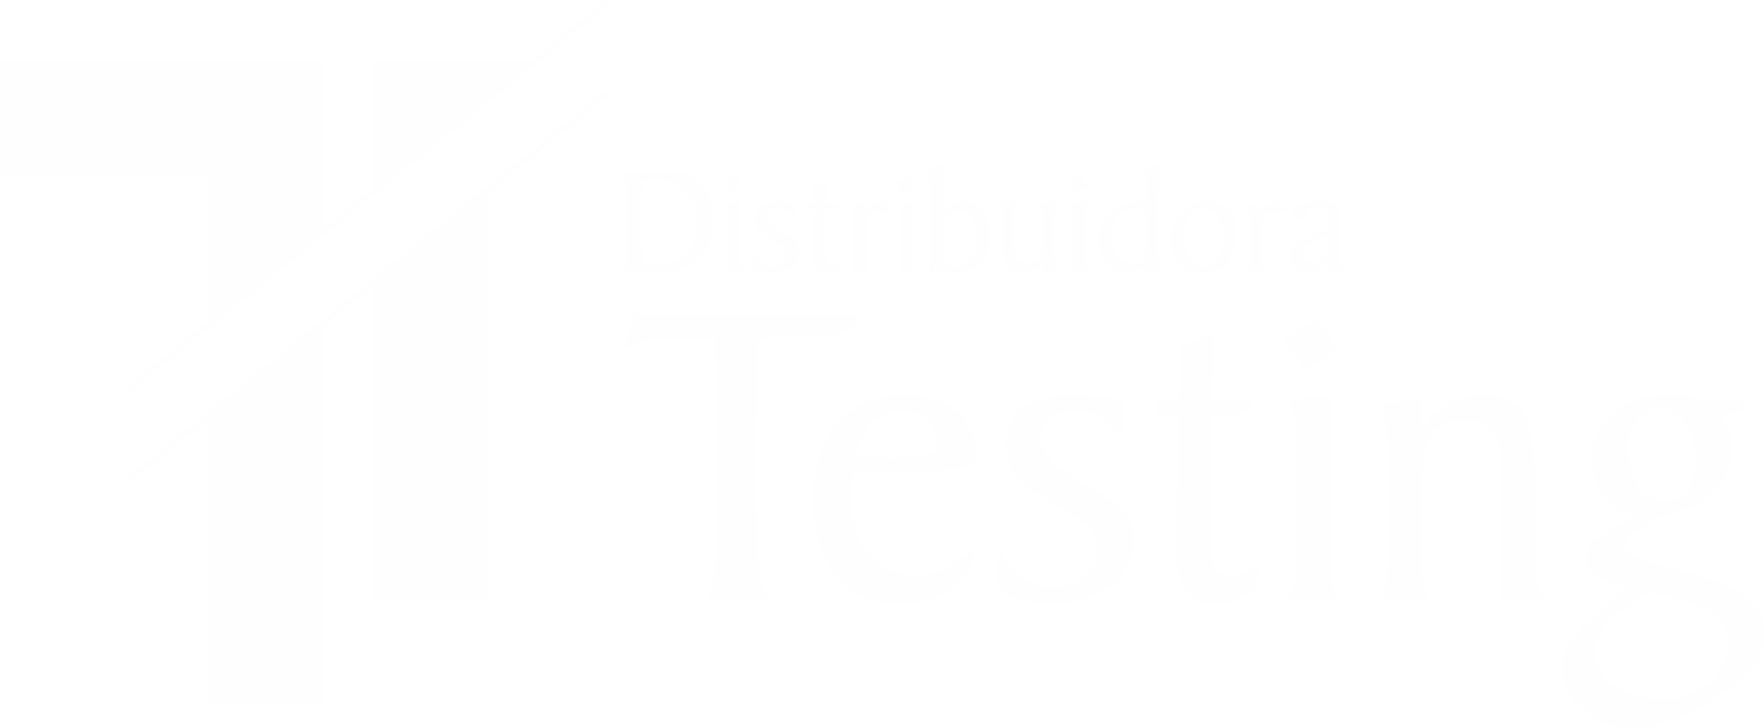 Distribuidora Testing